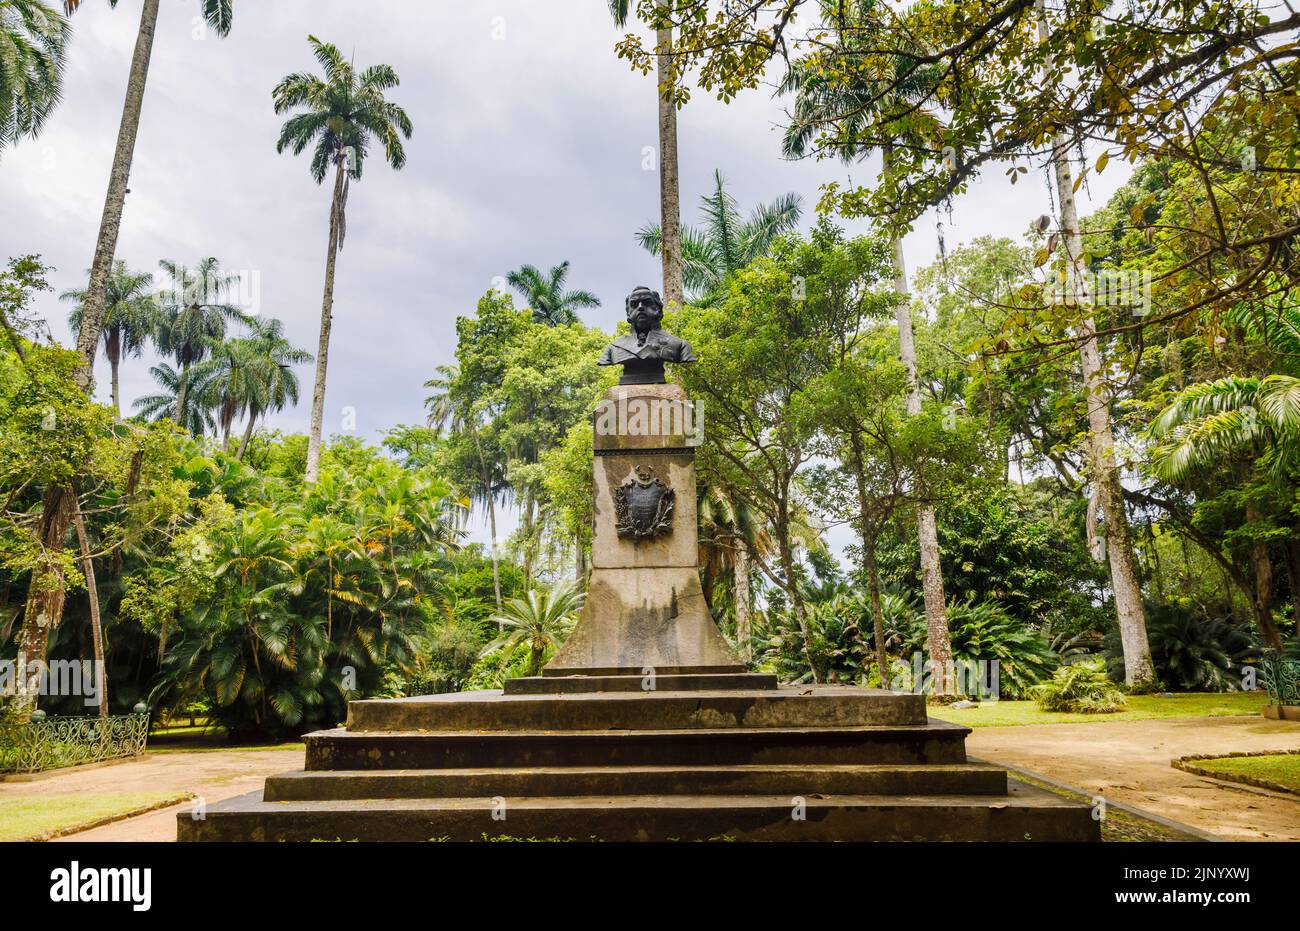 Bust and coat of arms of D Joao VI, founder of the Botanical Garden (Jardim Botanico), South Zone, Rio de Janeiro, Brazil Stock Photo